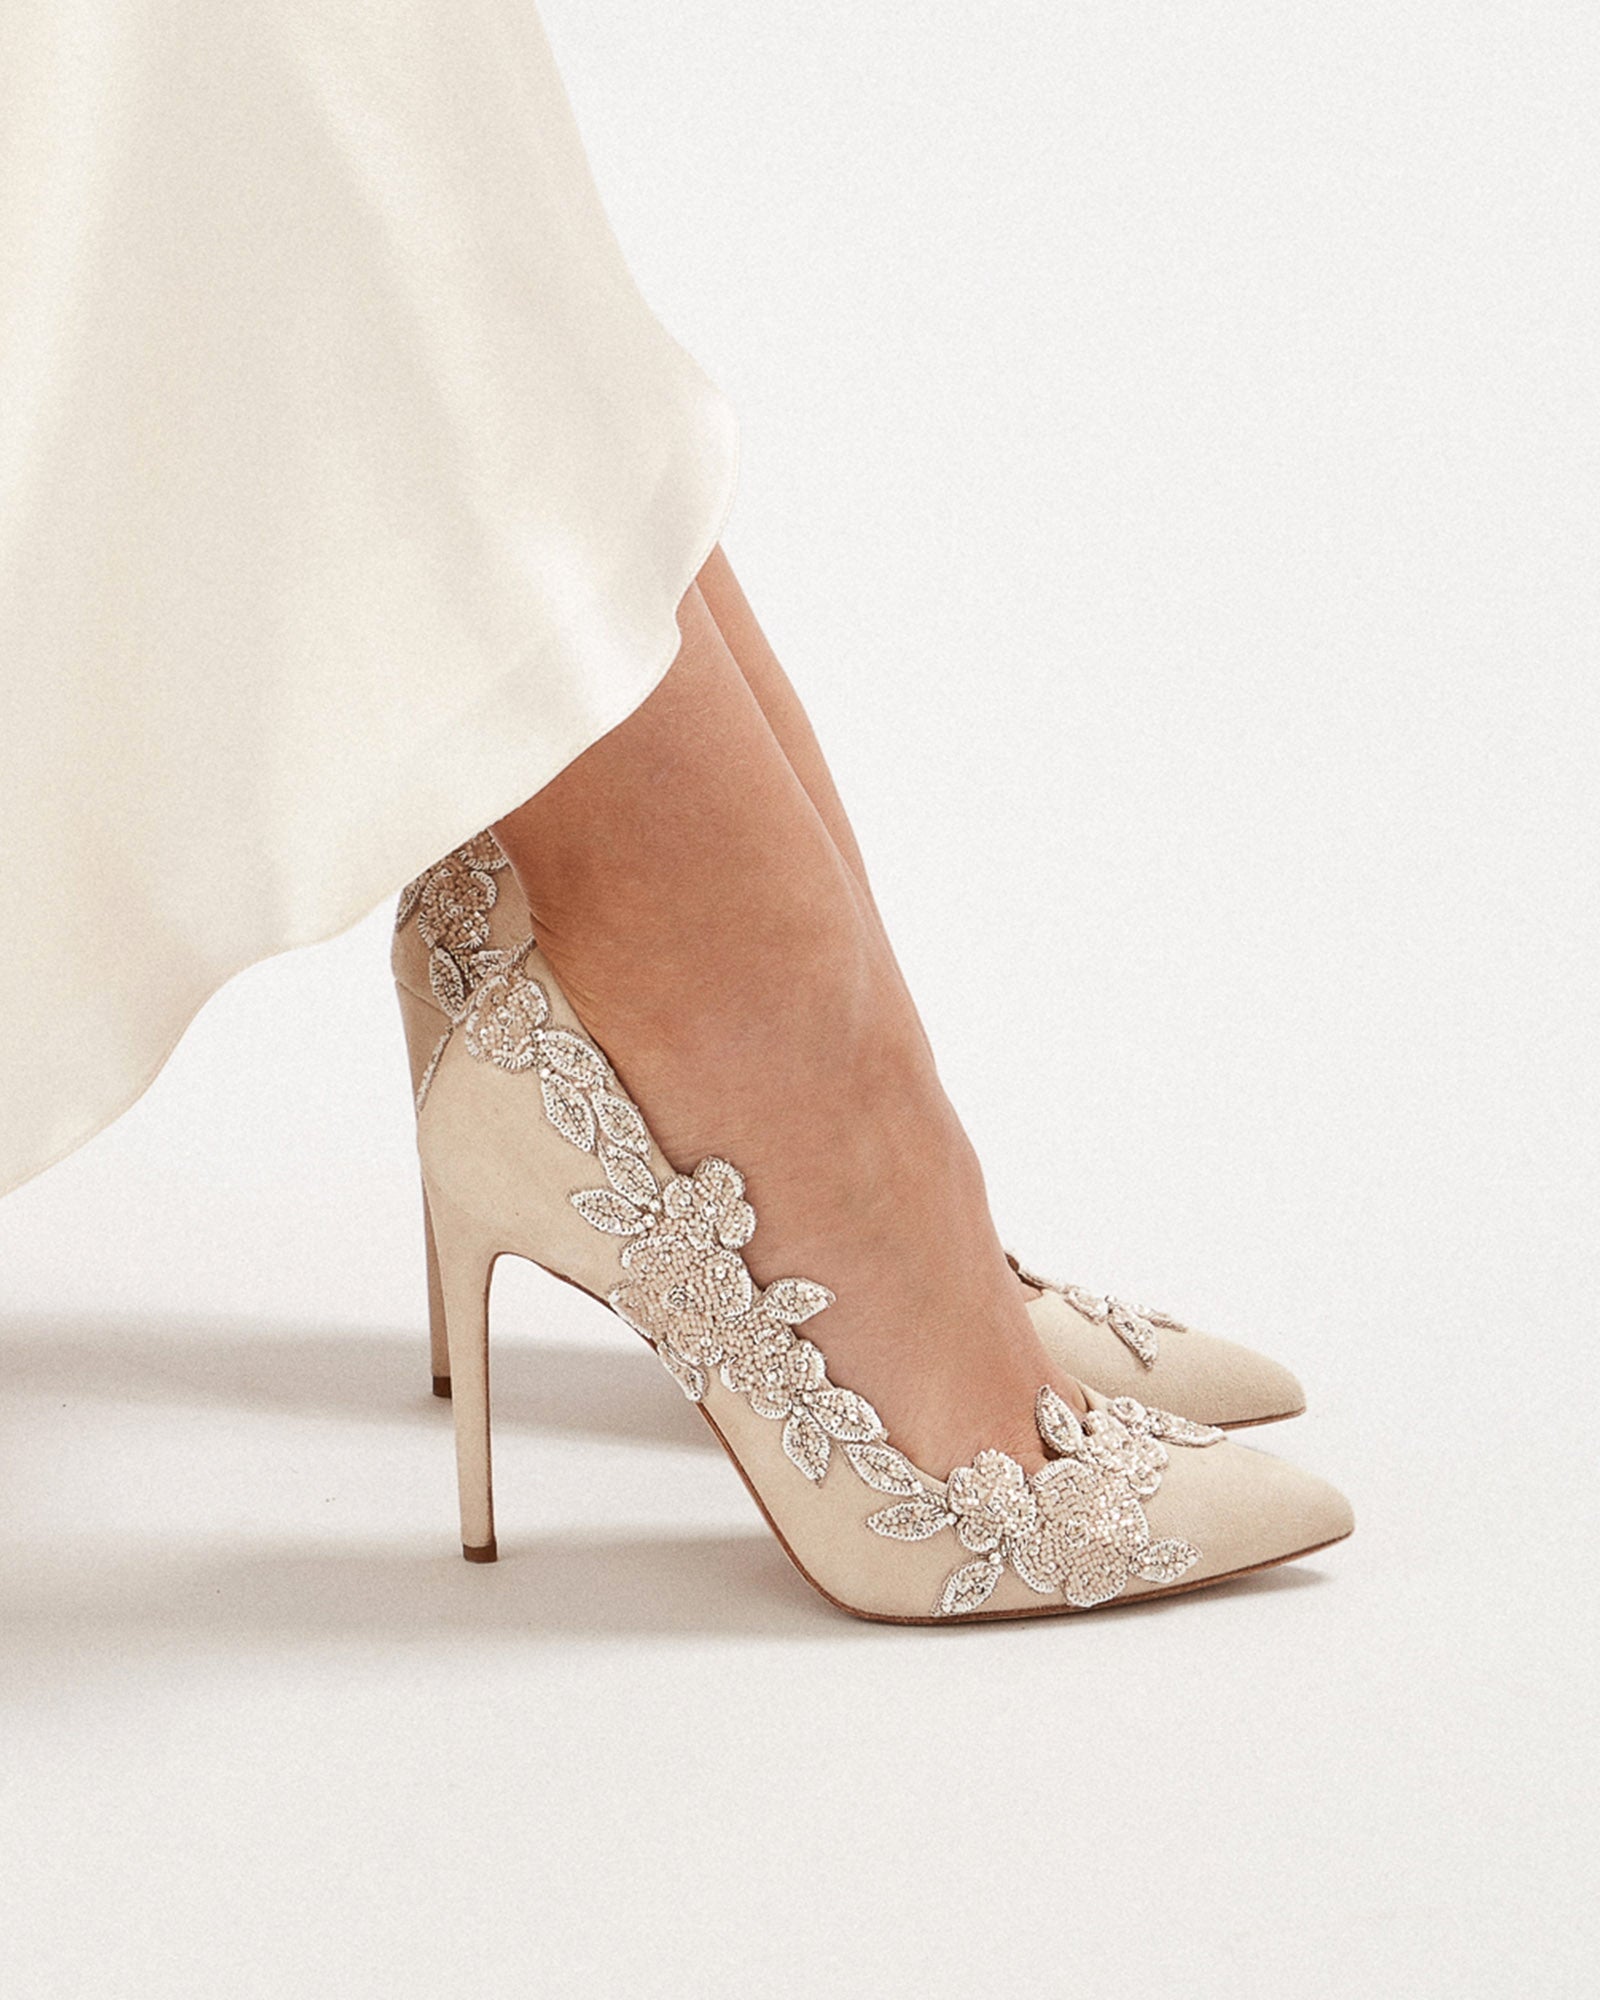 2020 Latest Bridel Sandals Design | High Heel And Plane Sandals Design |  Branded Wedding Sandals | Girls high heel shoes, Heels, Girls high heels